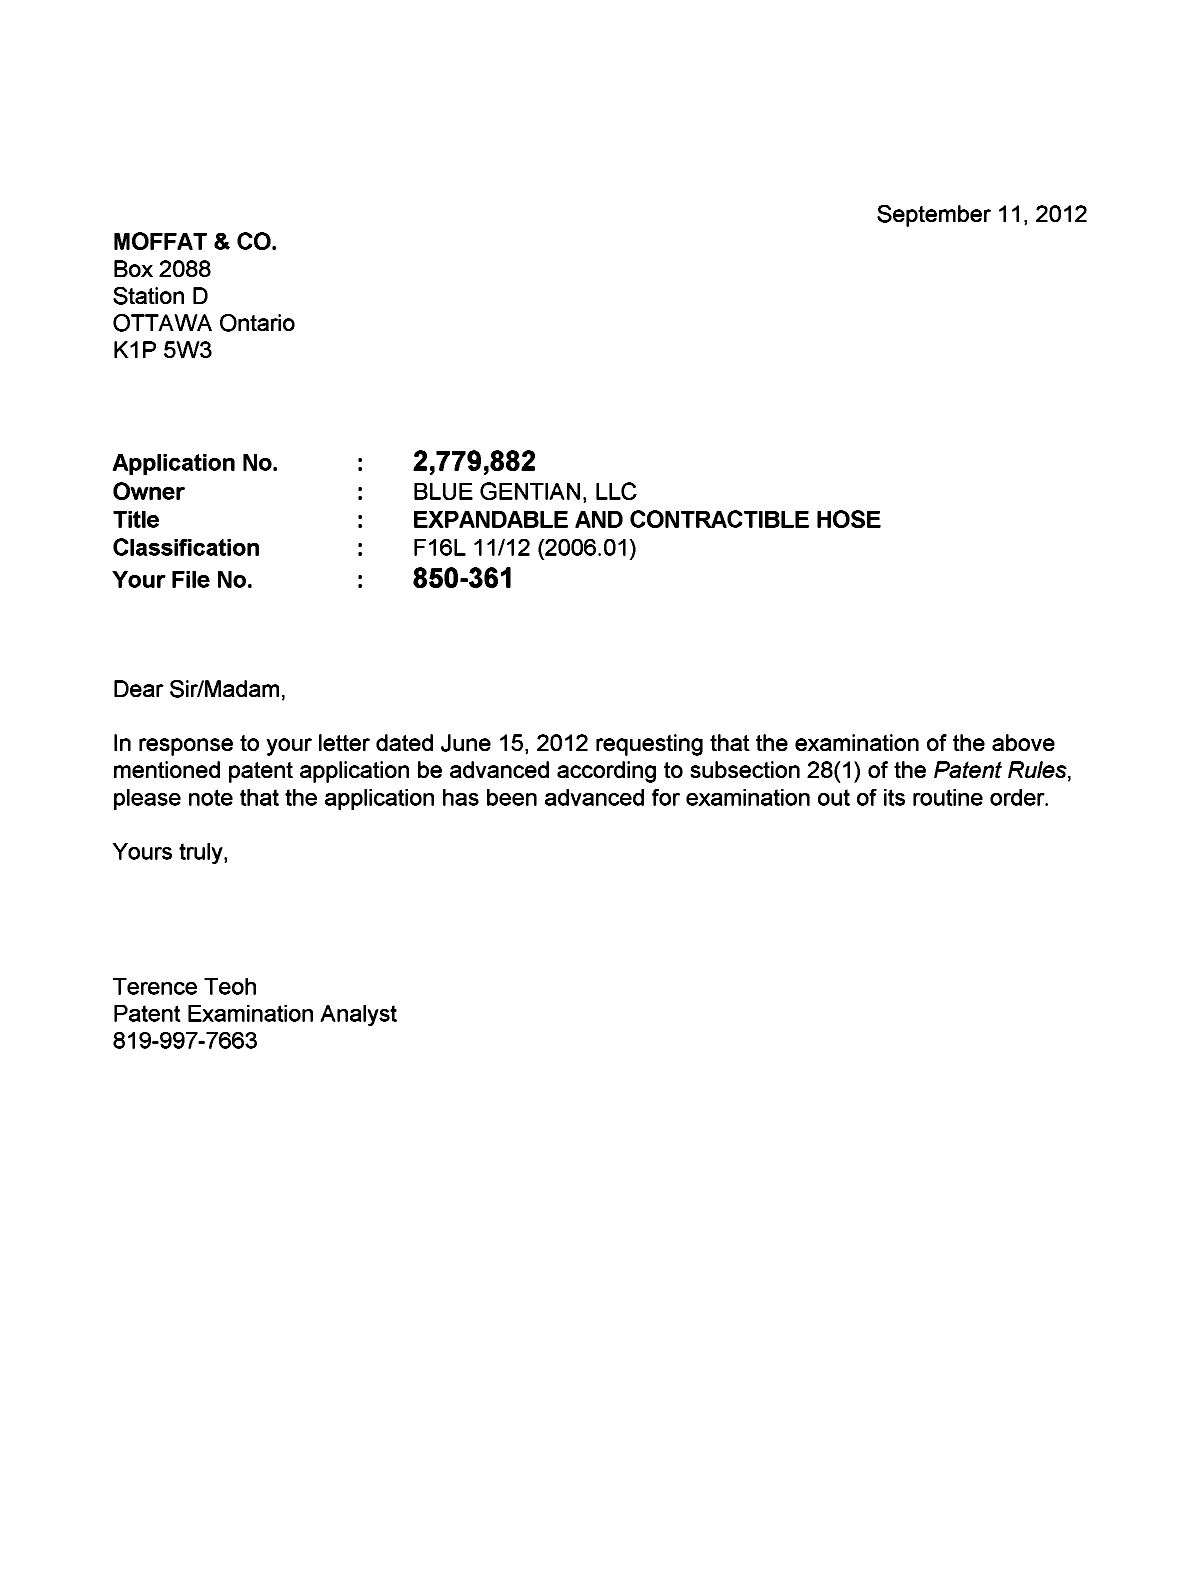 Canadian Patent Document 2779882. Prosecution-Amendment 20120911. Image 1 of 1